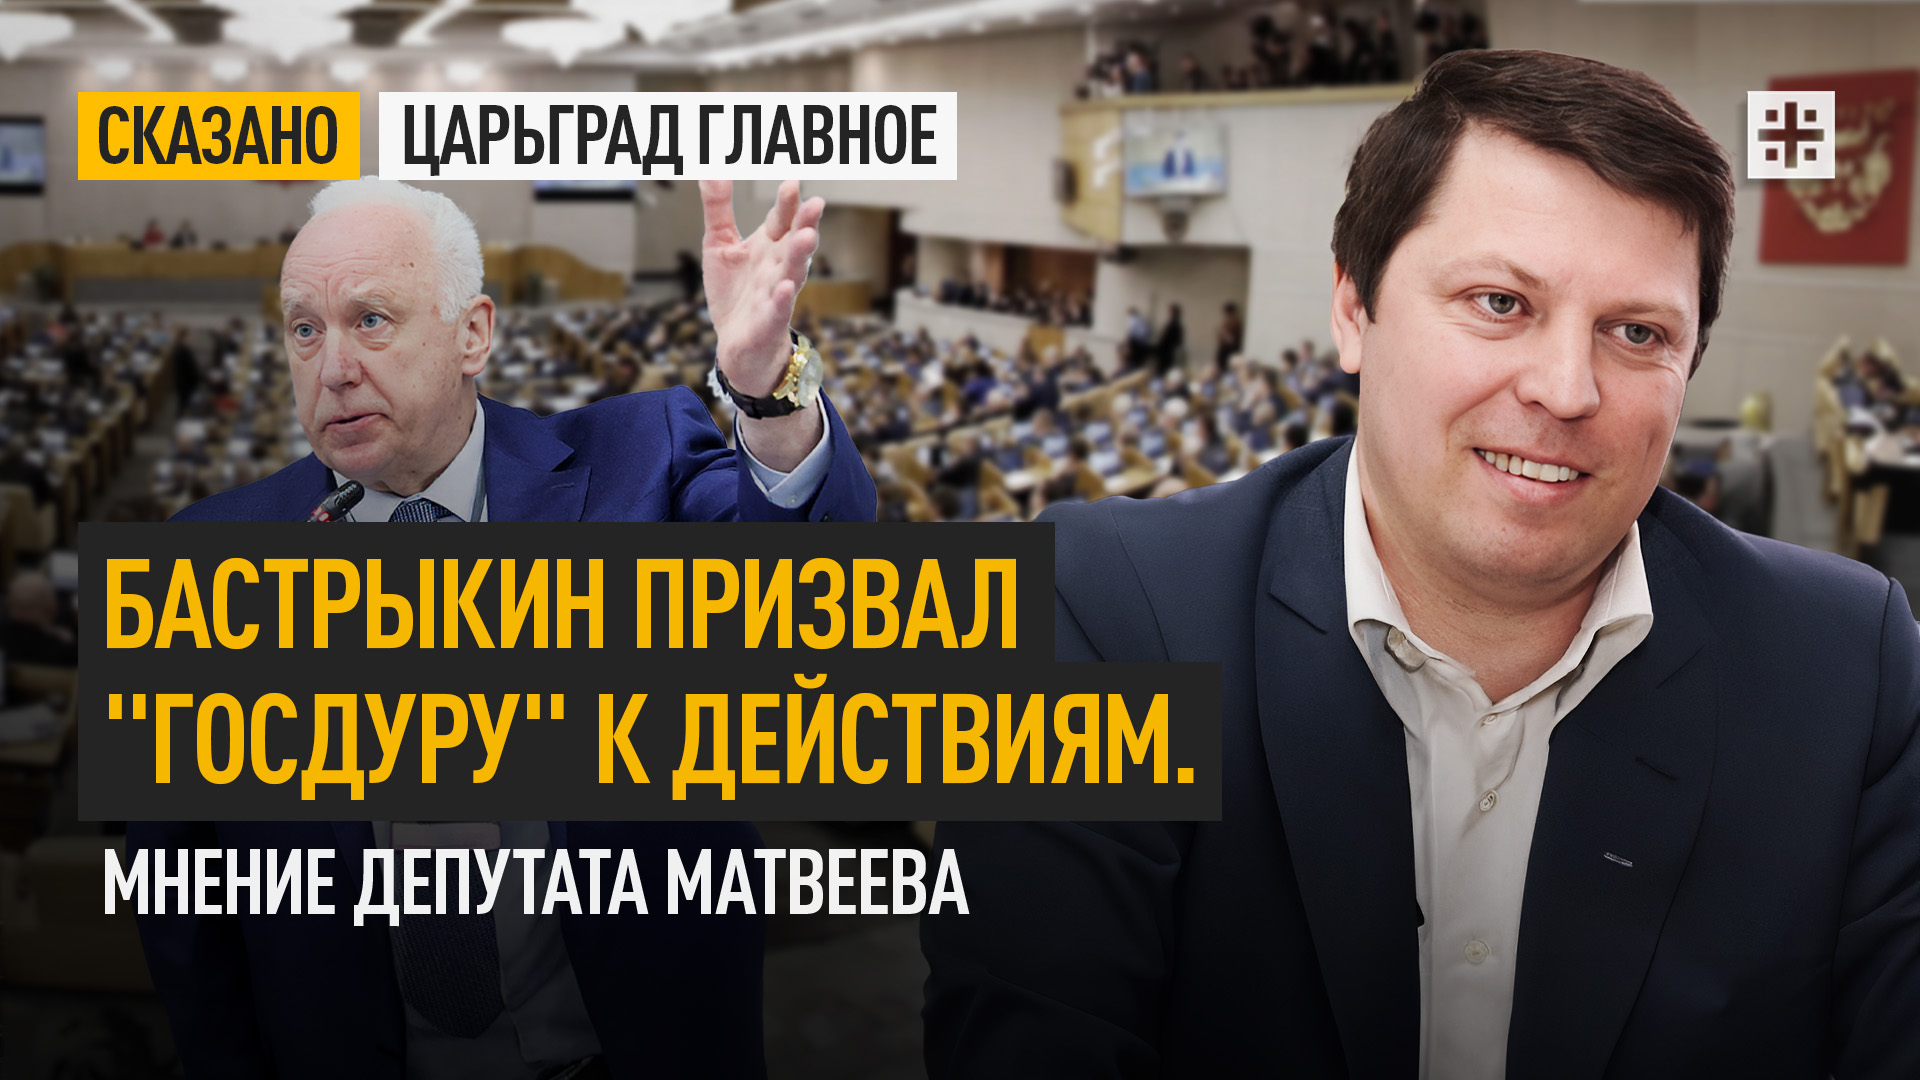 Бастрыкин призвал "Госдуру" к действиям. Мнение депутата Матвеева